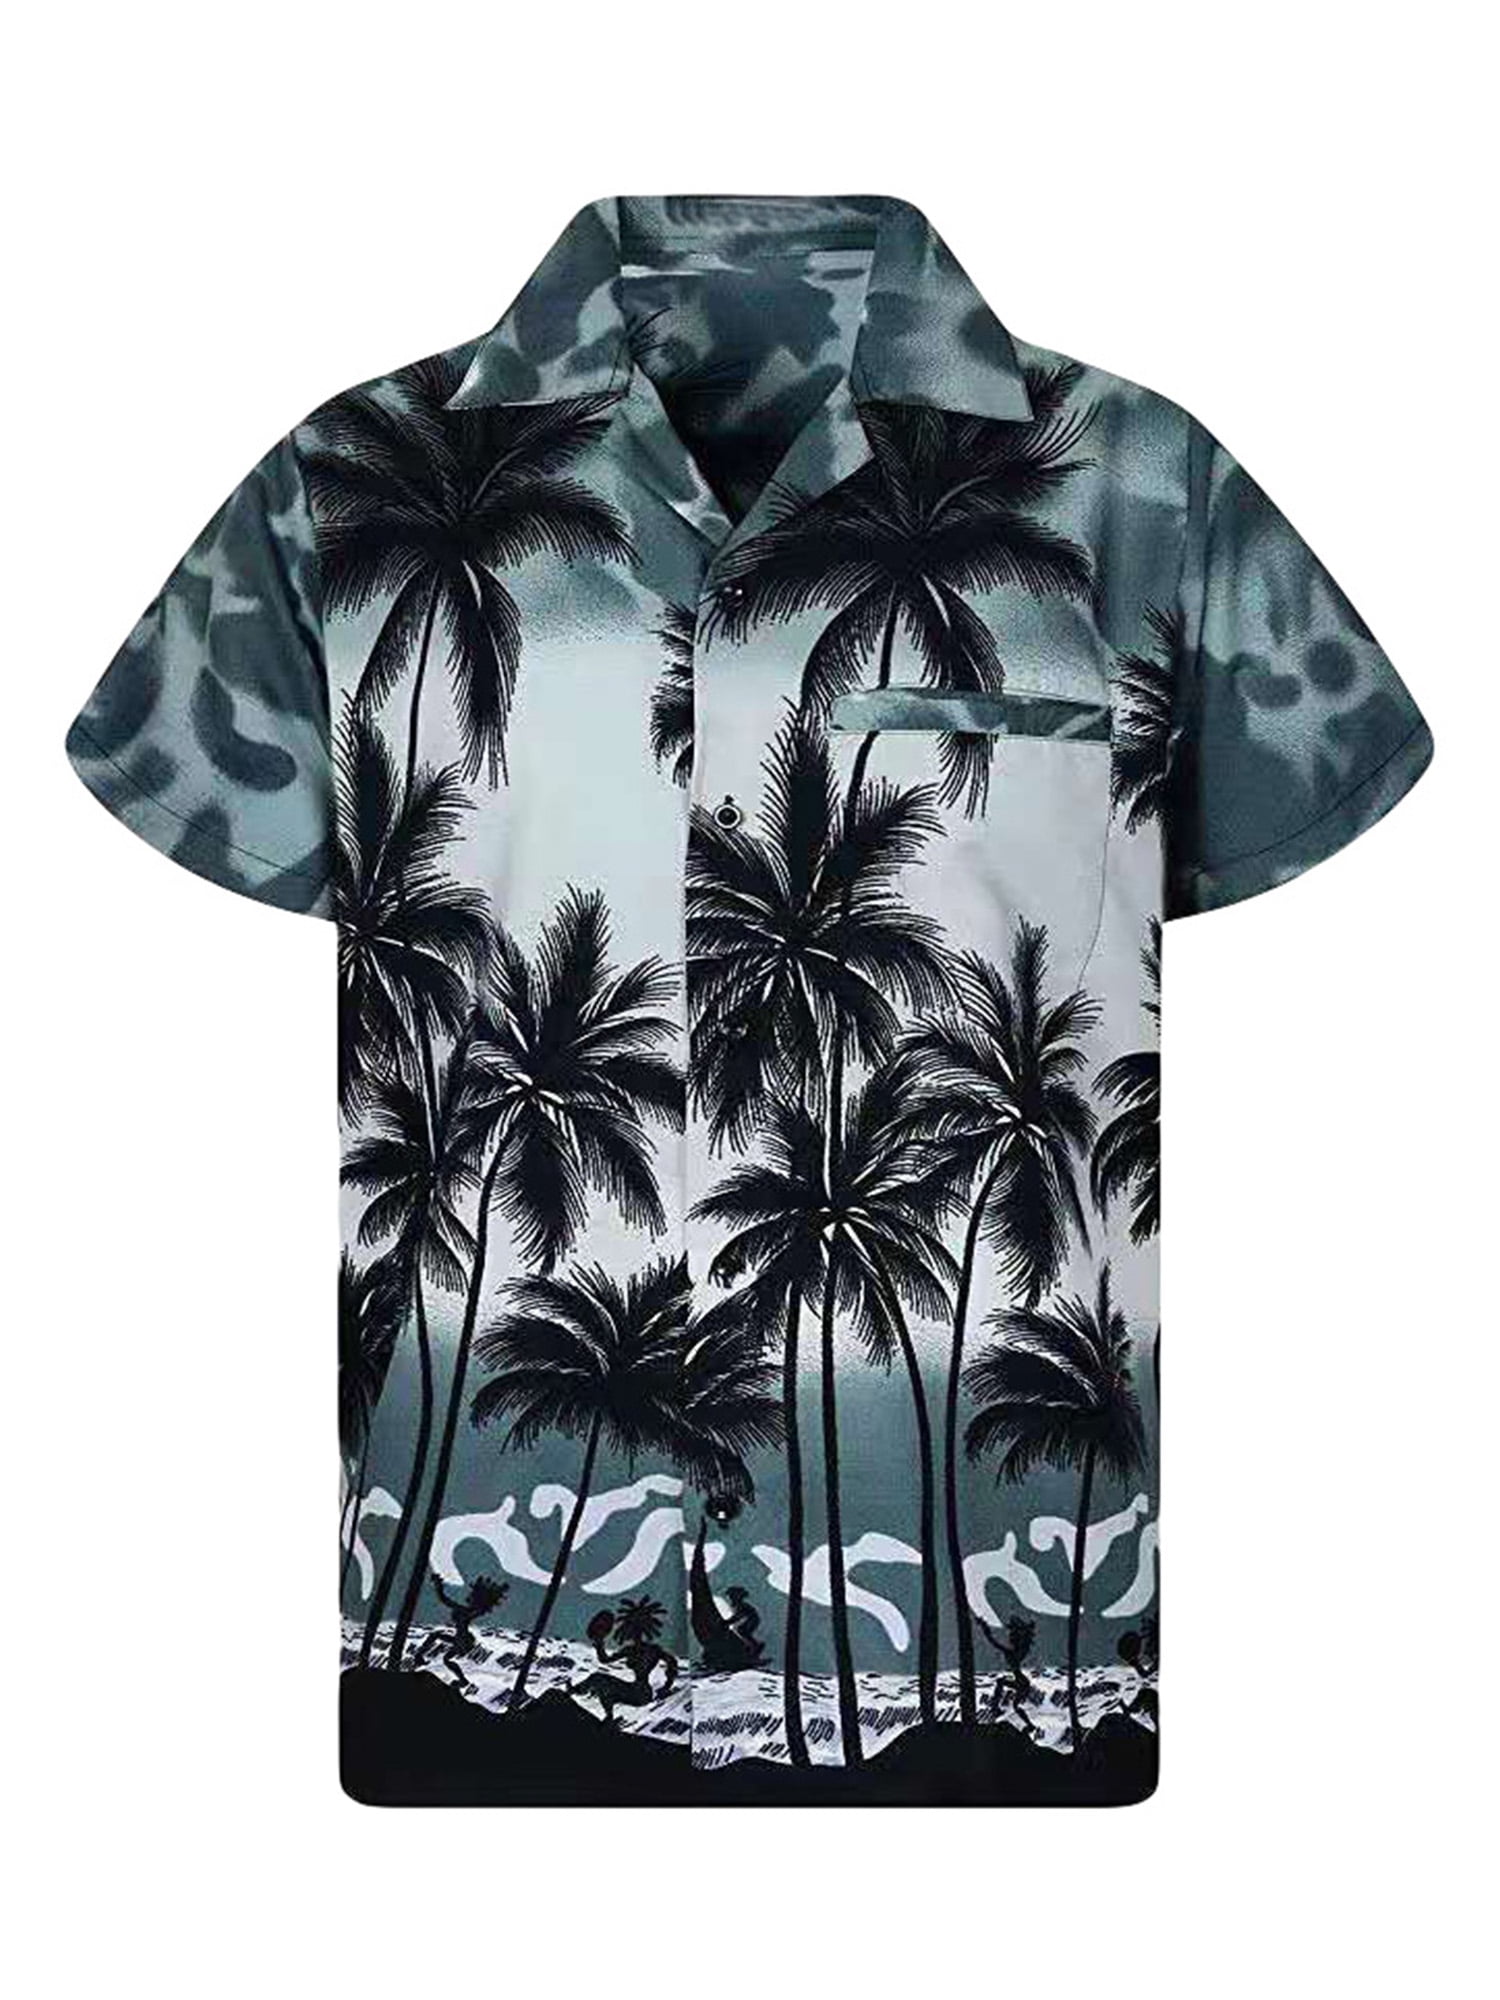 HKDGID Mens Summer Short Sleeve Japanese Kimono Hawaiian Beach Spa Shirt T-Shirt Top